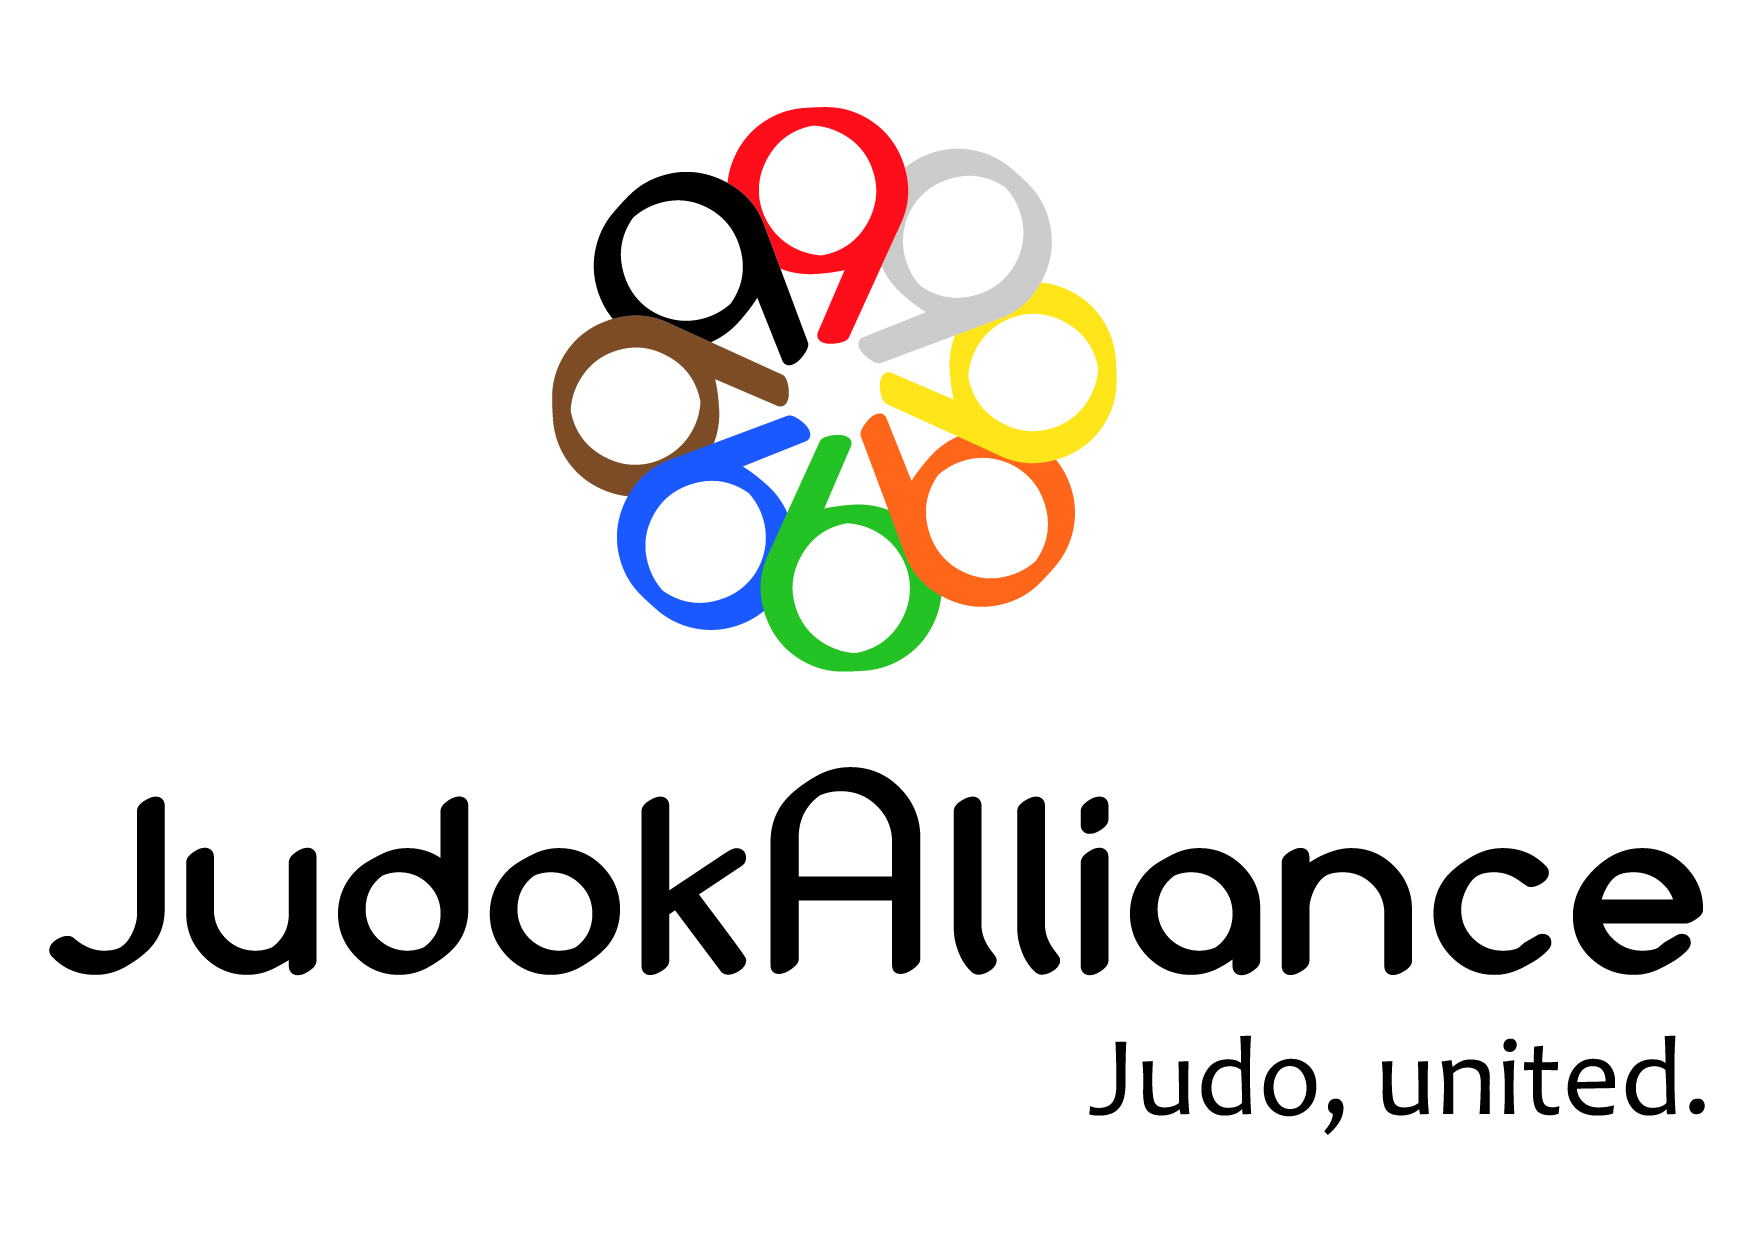 Judokalliance - Judo United